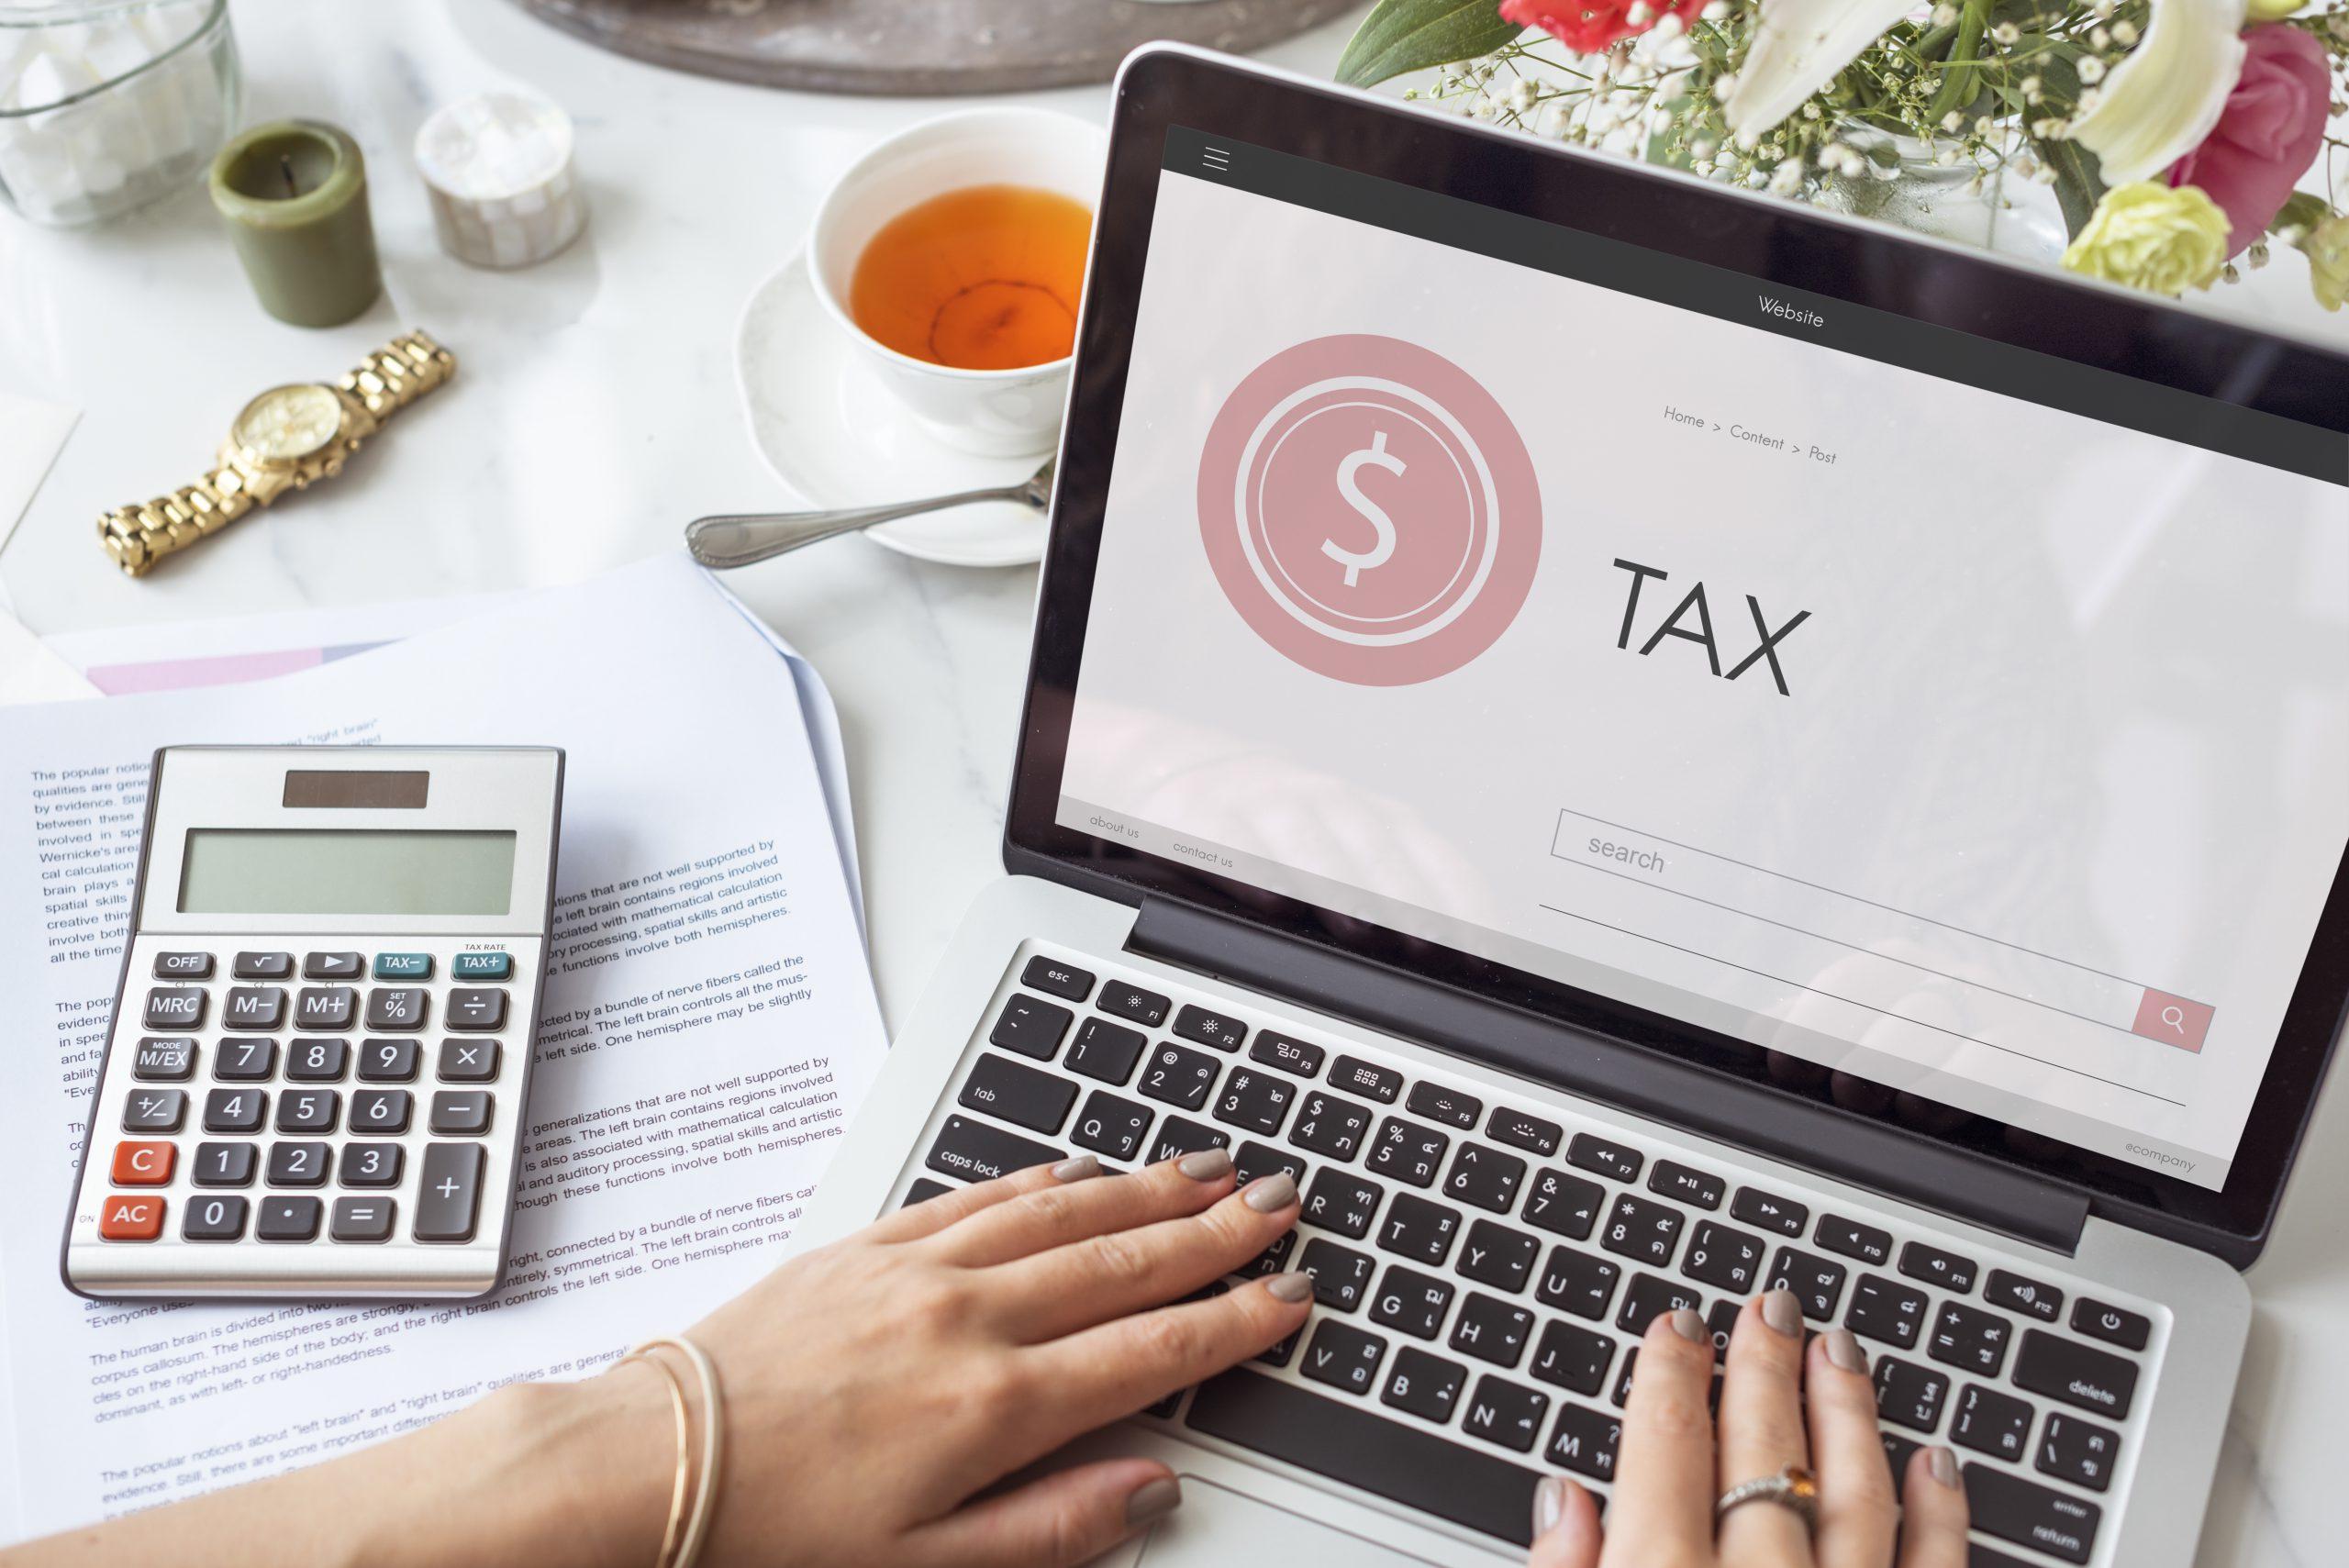 How to lodge an individual tax return